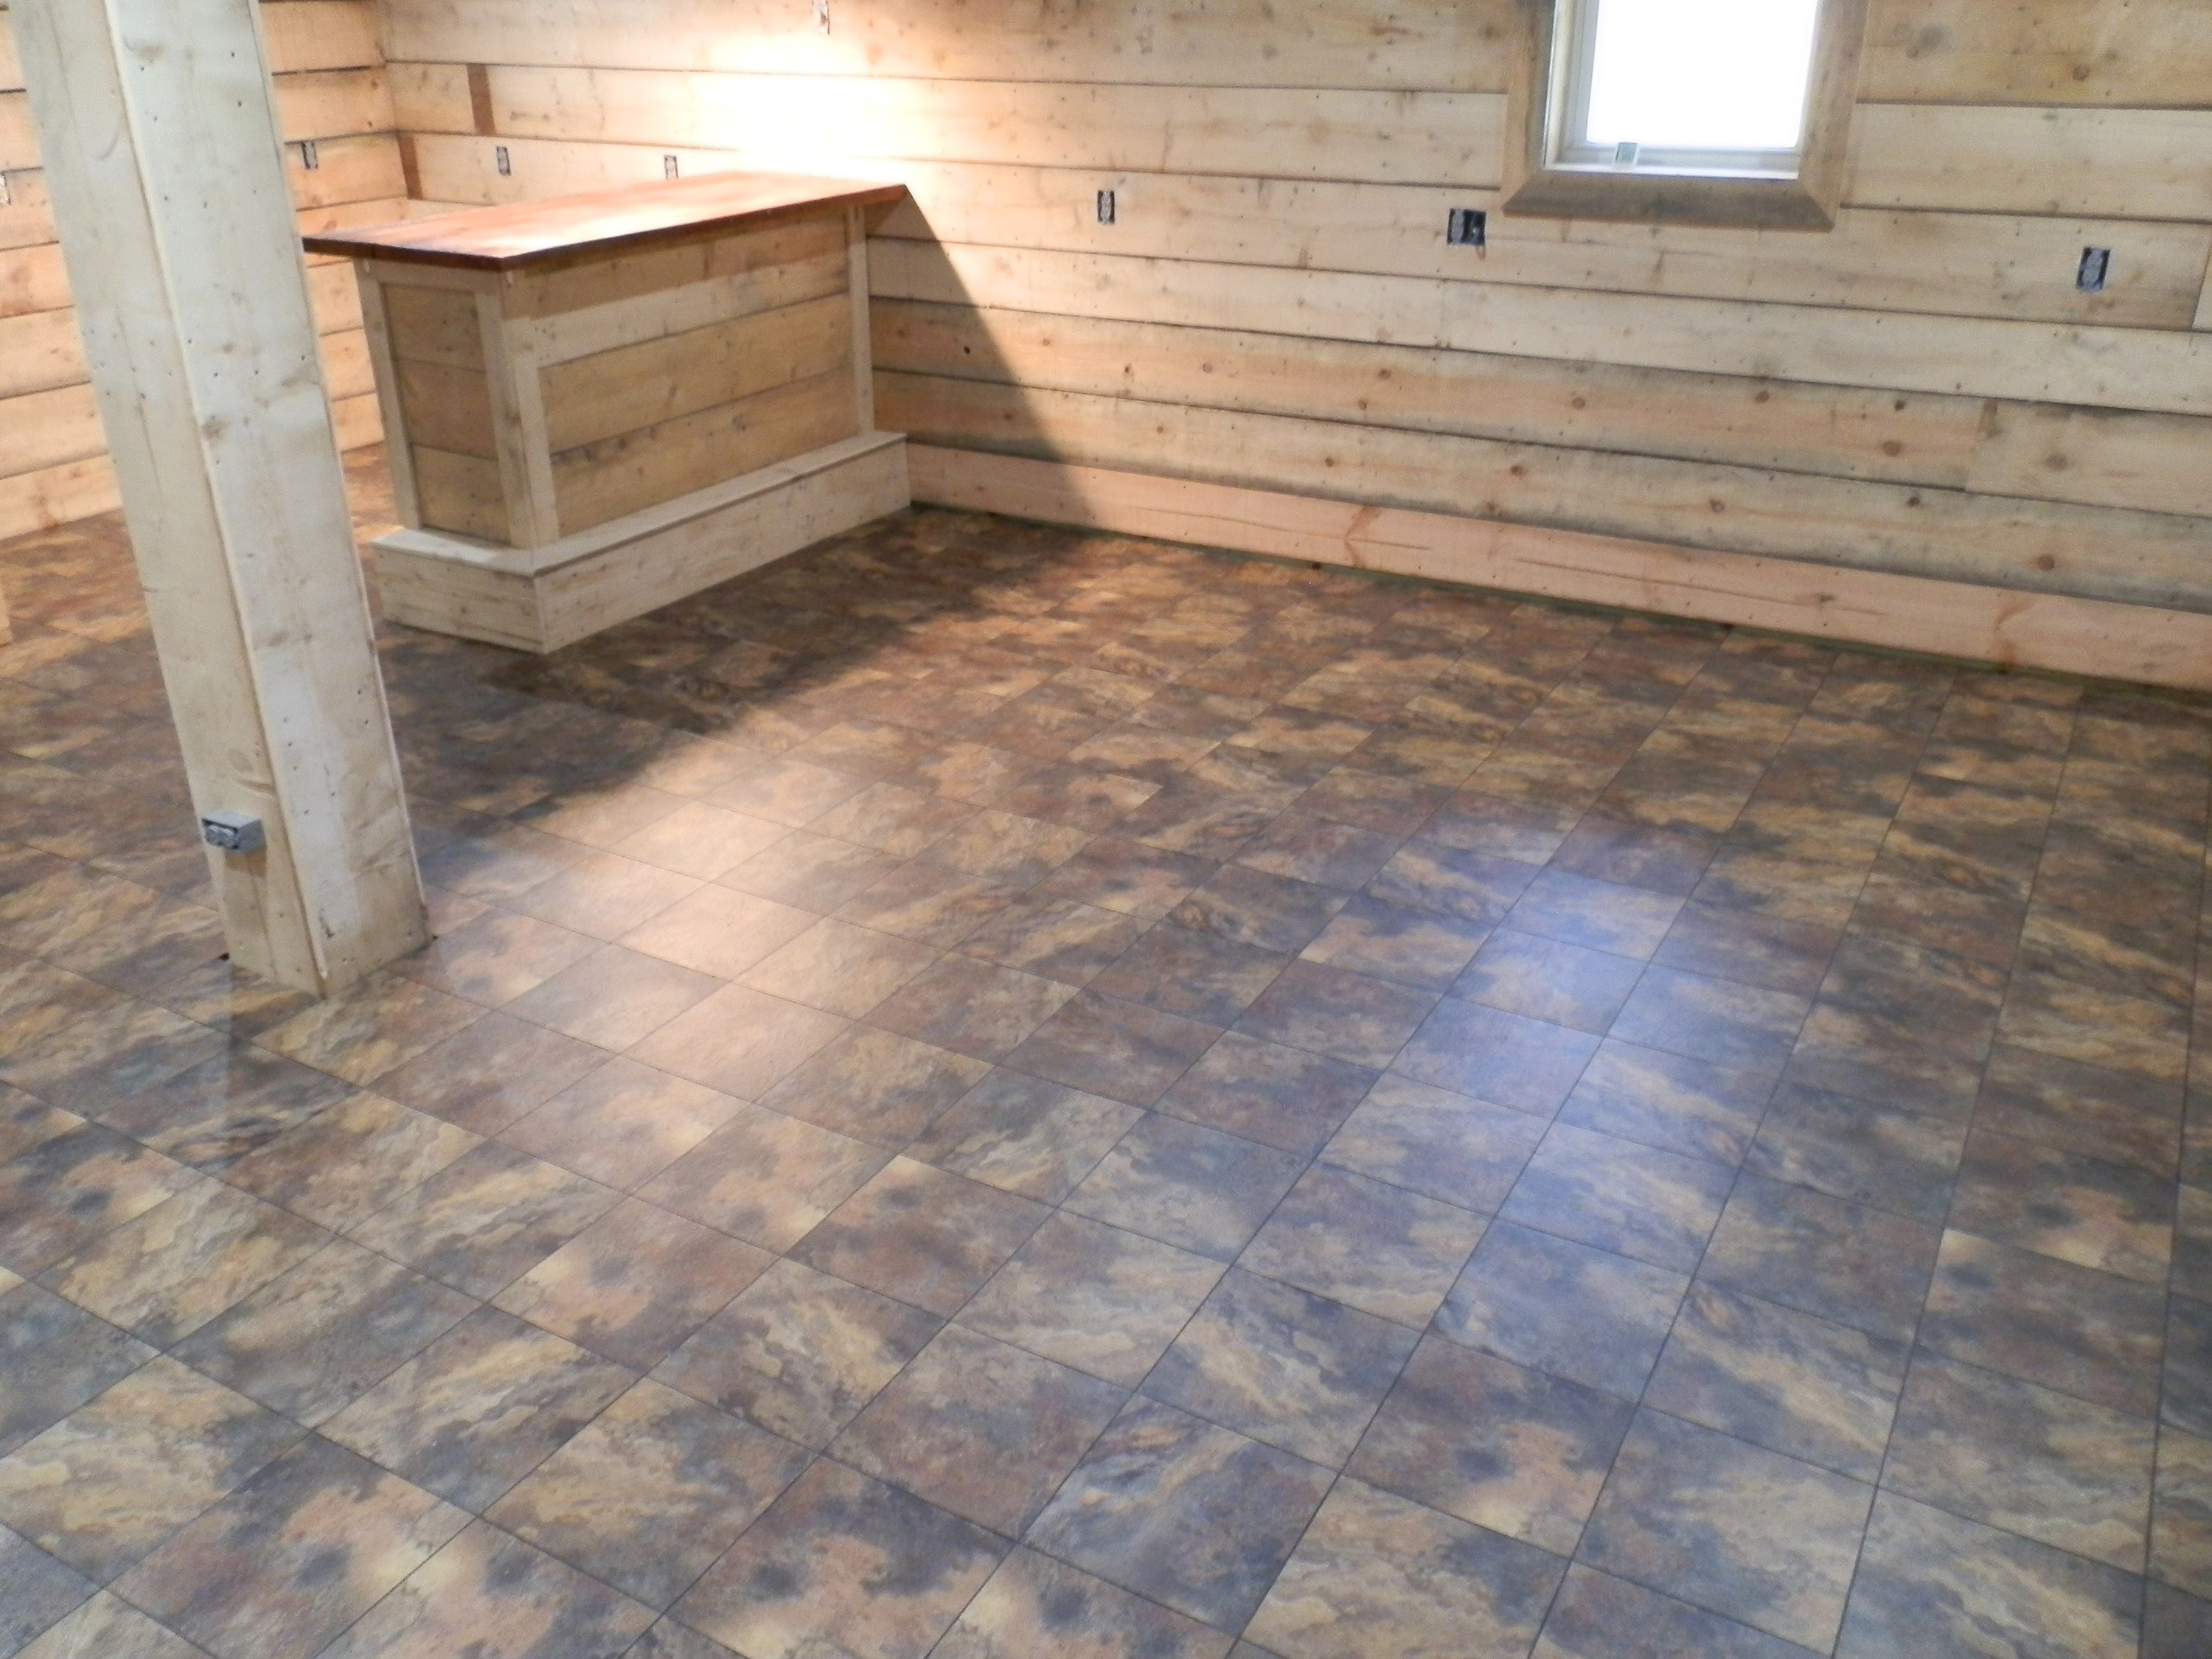 Max Tile Raised Floor Tile 5/8 Inch x 1x1 Ft. customer review photo 2